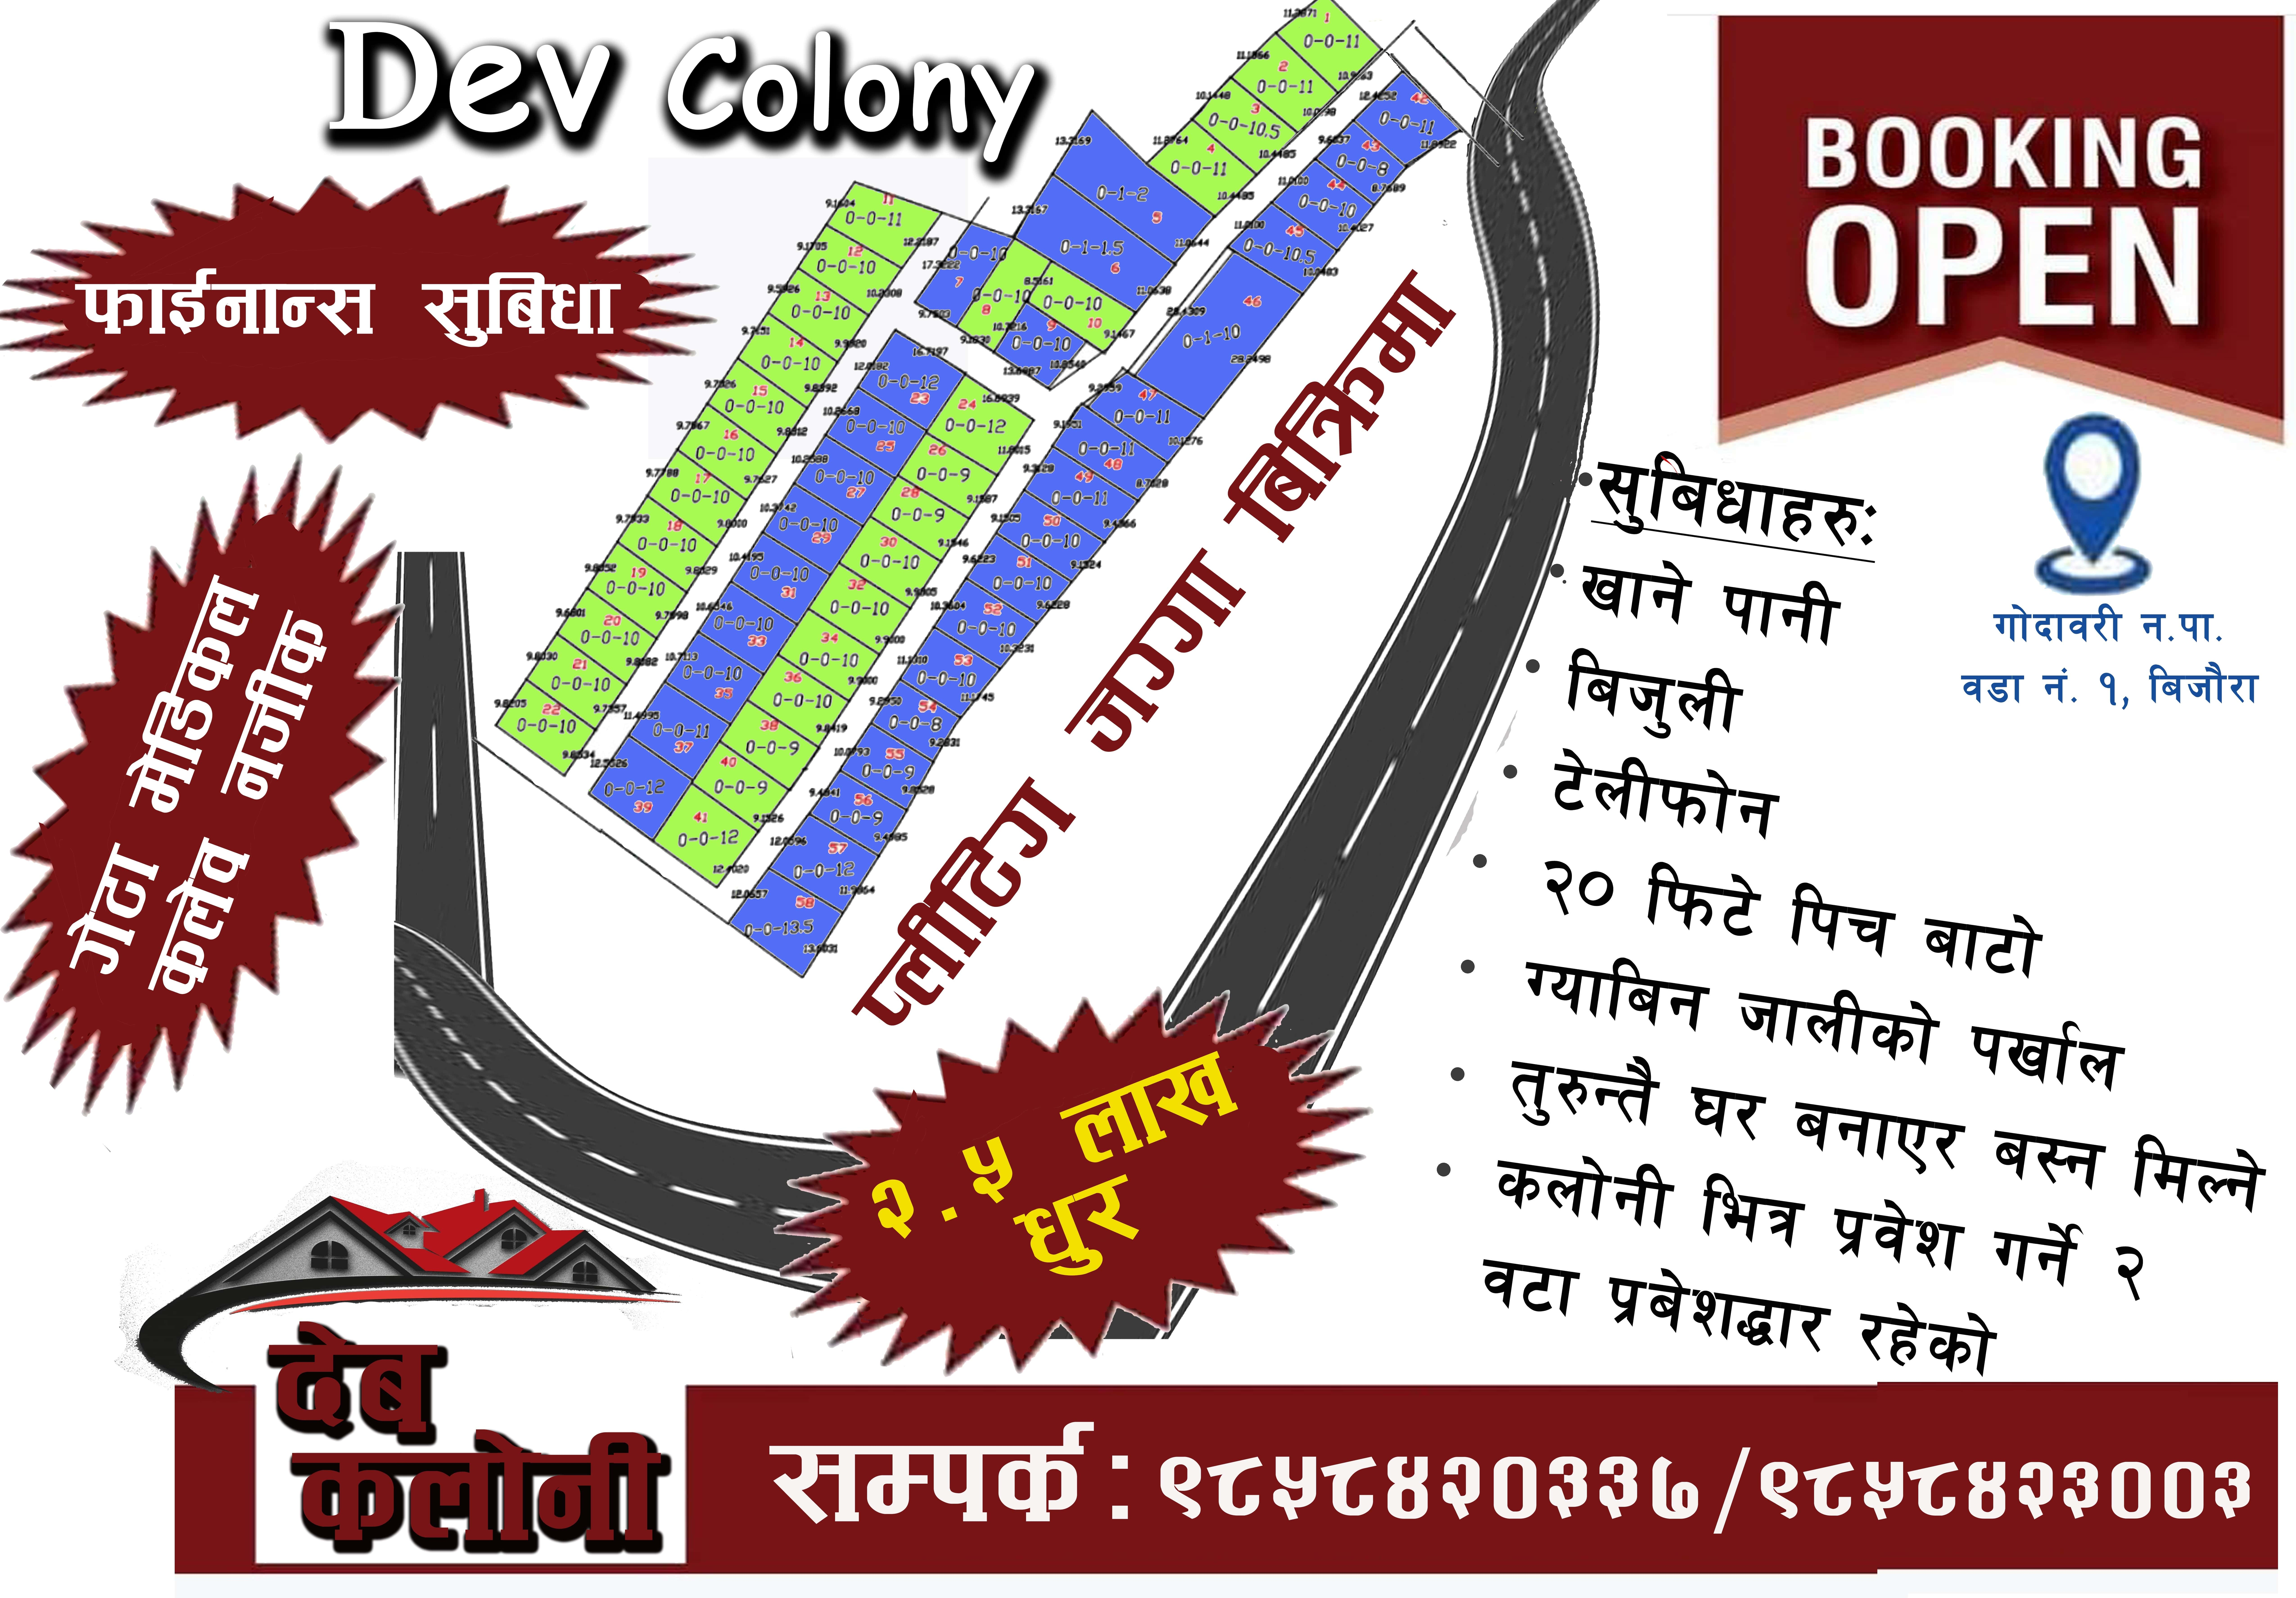 Dev Colony Ad eBigul